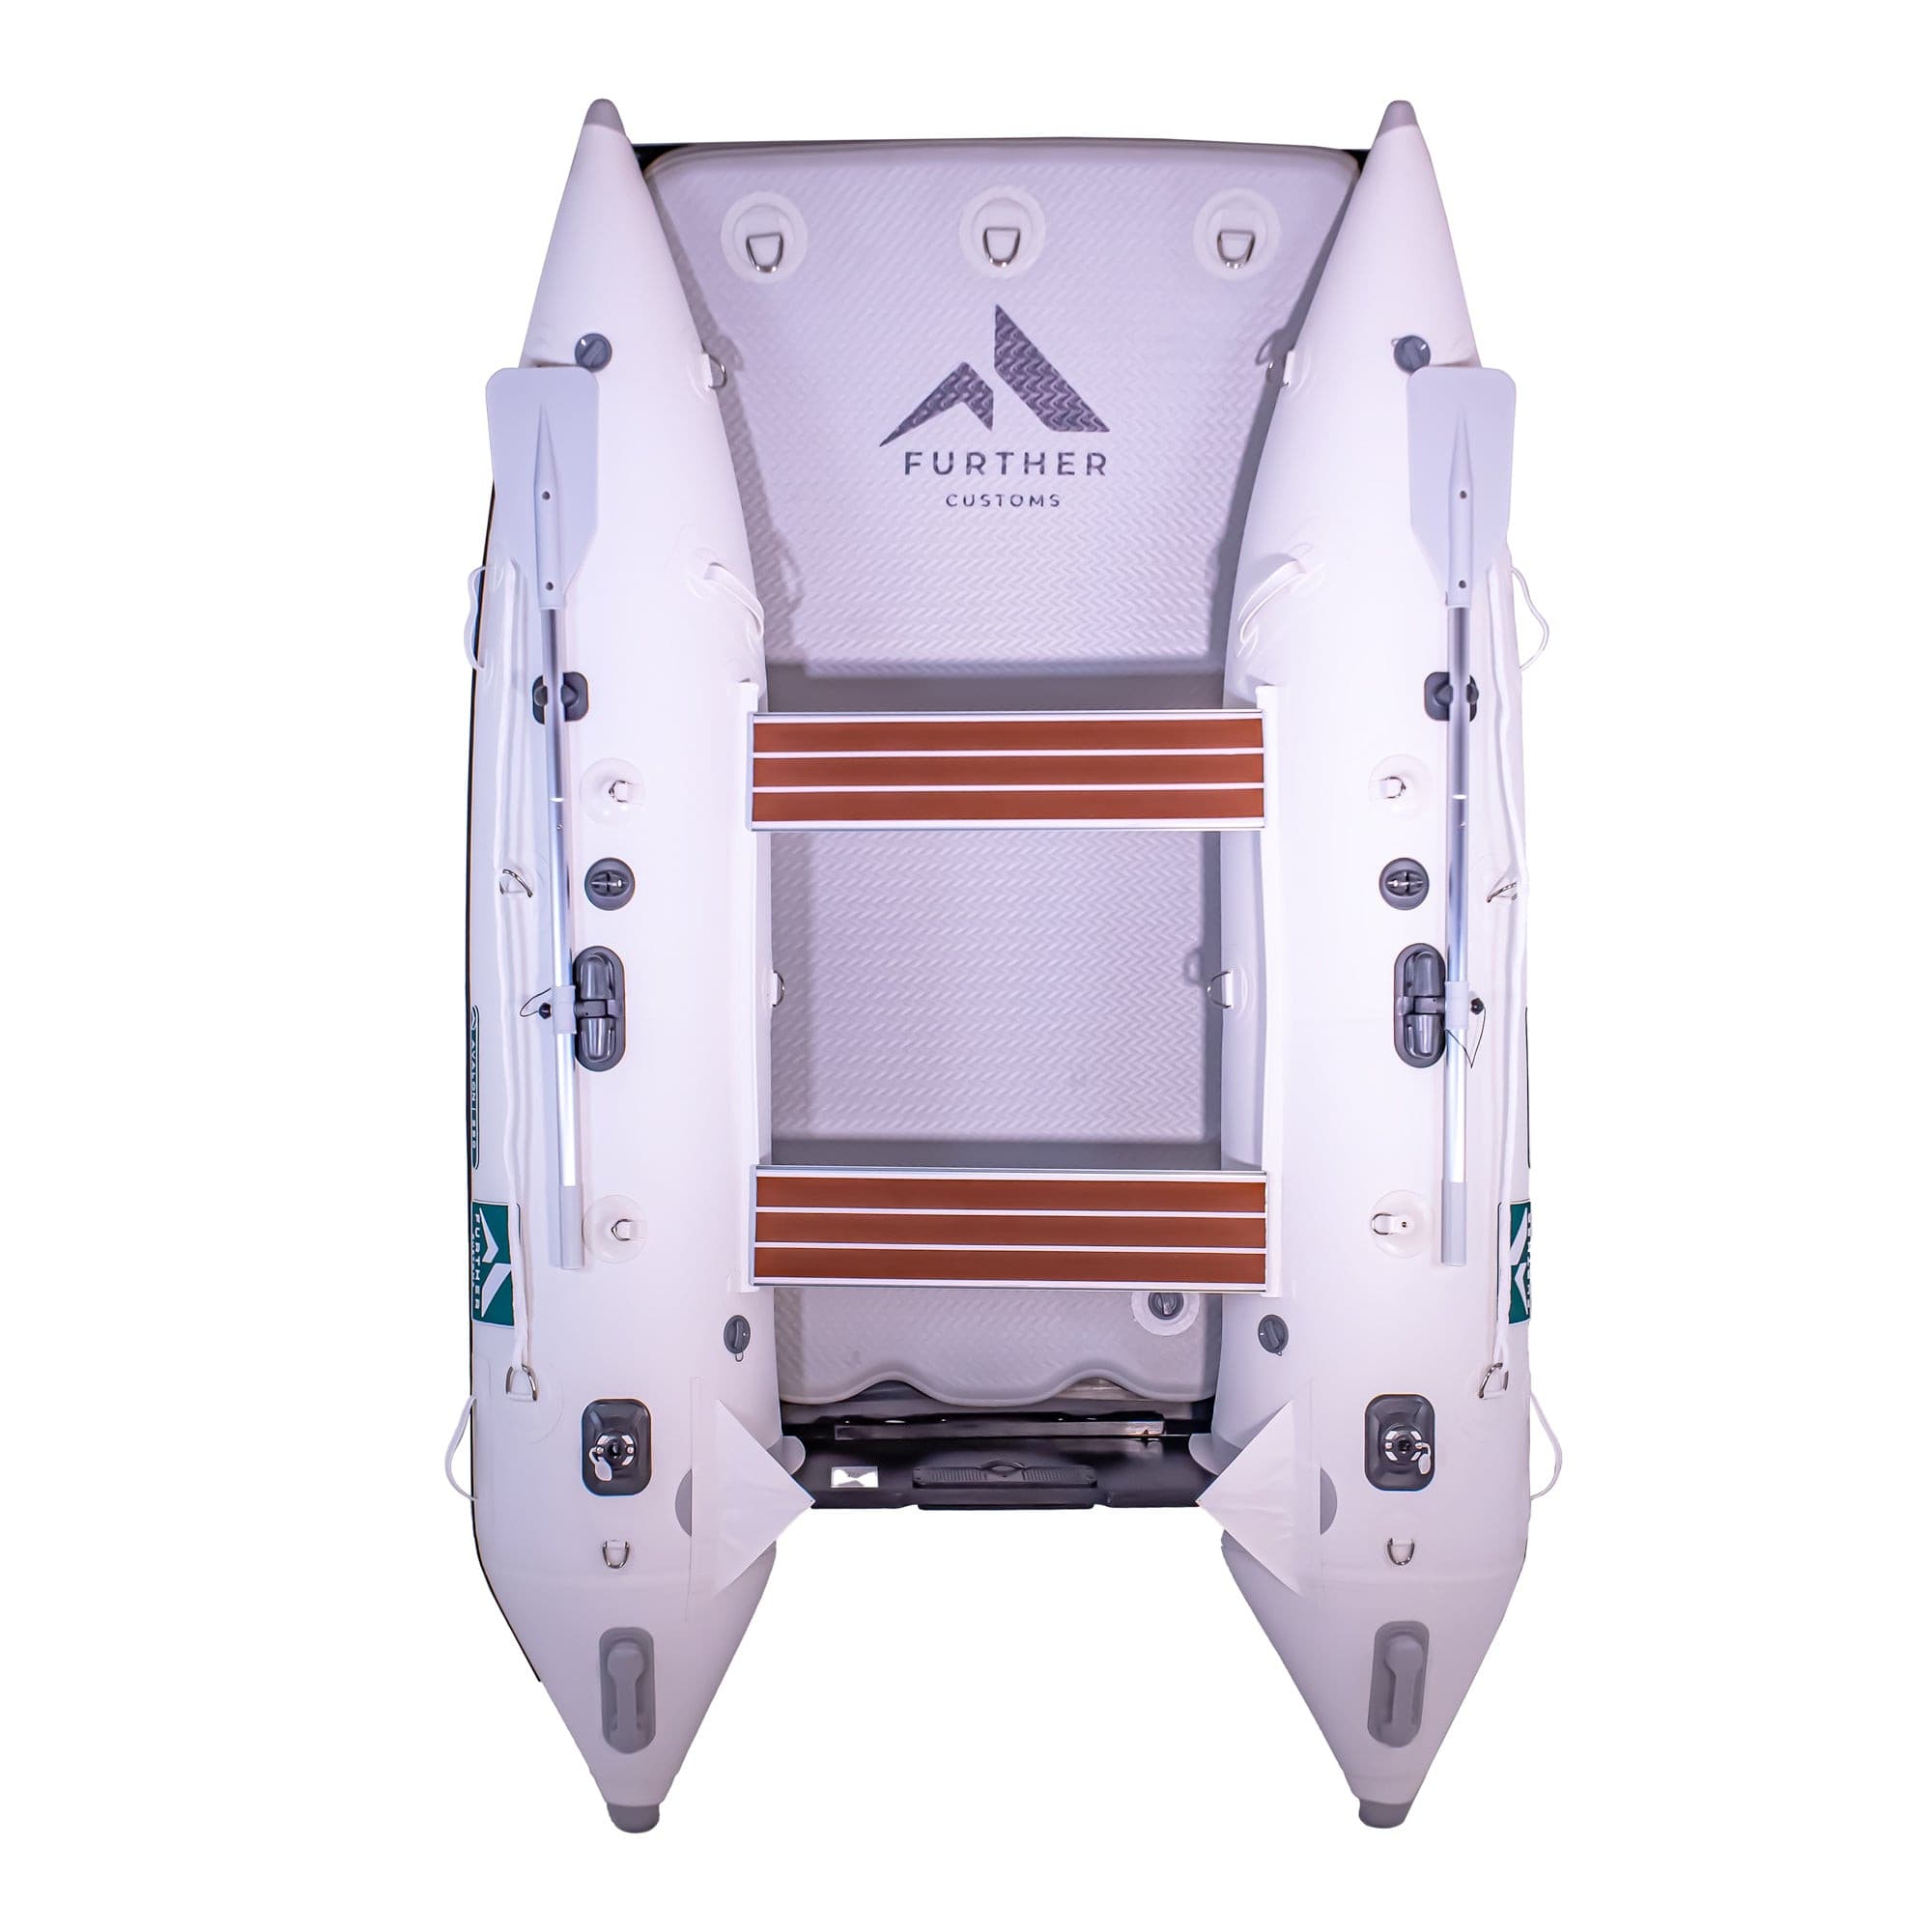 Further Customs Inflatable Catamaran Kit